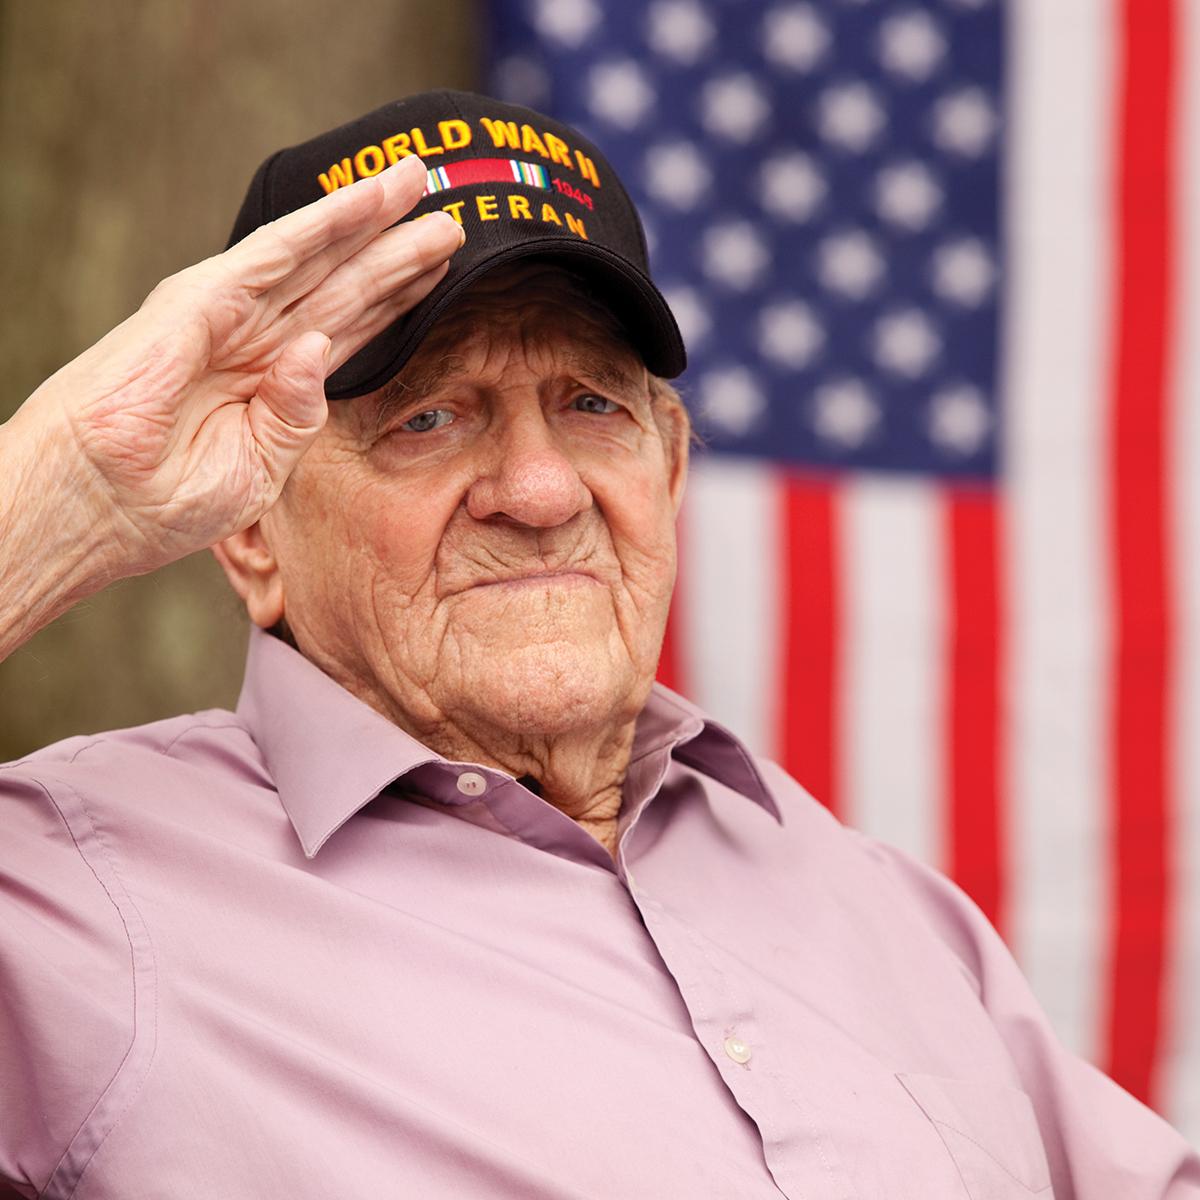 An elderly man wearing a World War II Veteran hat salutes in front of an American flag.